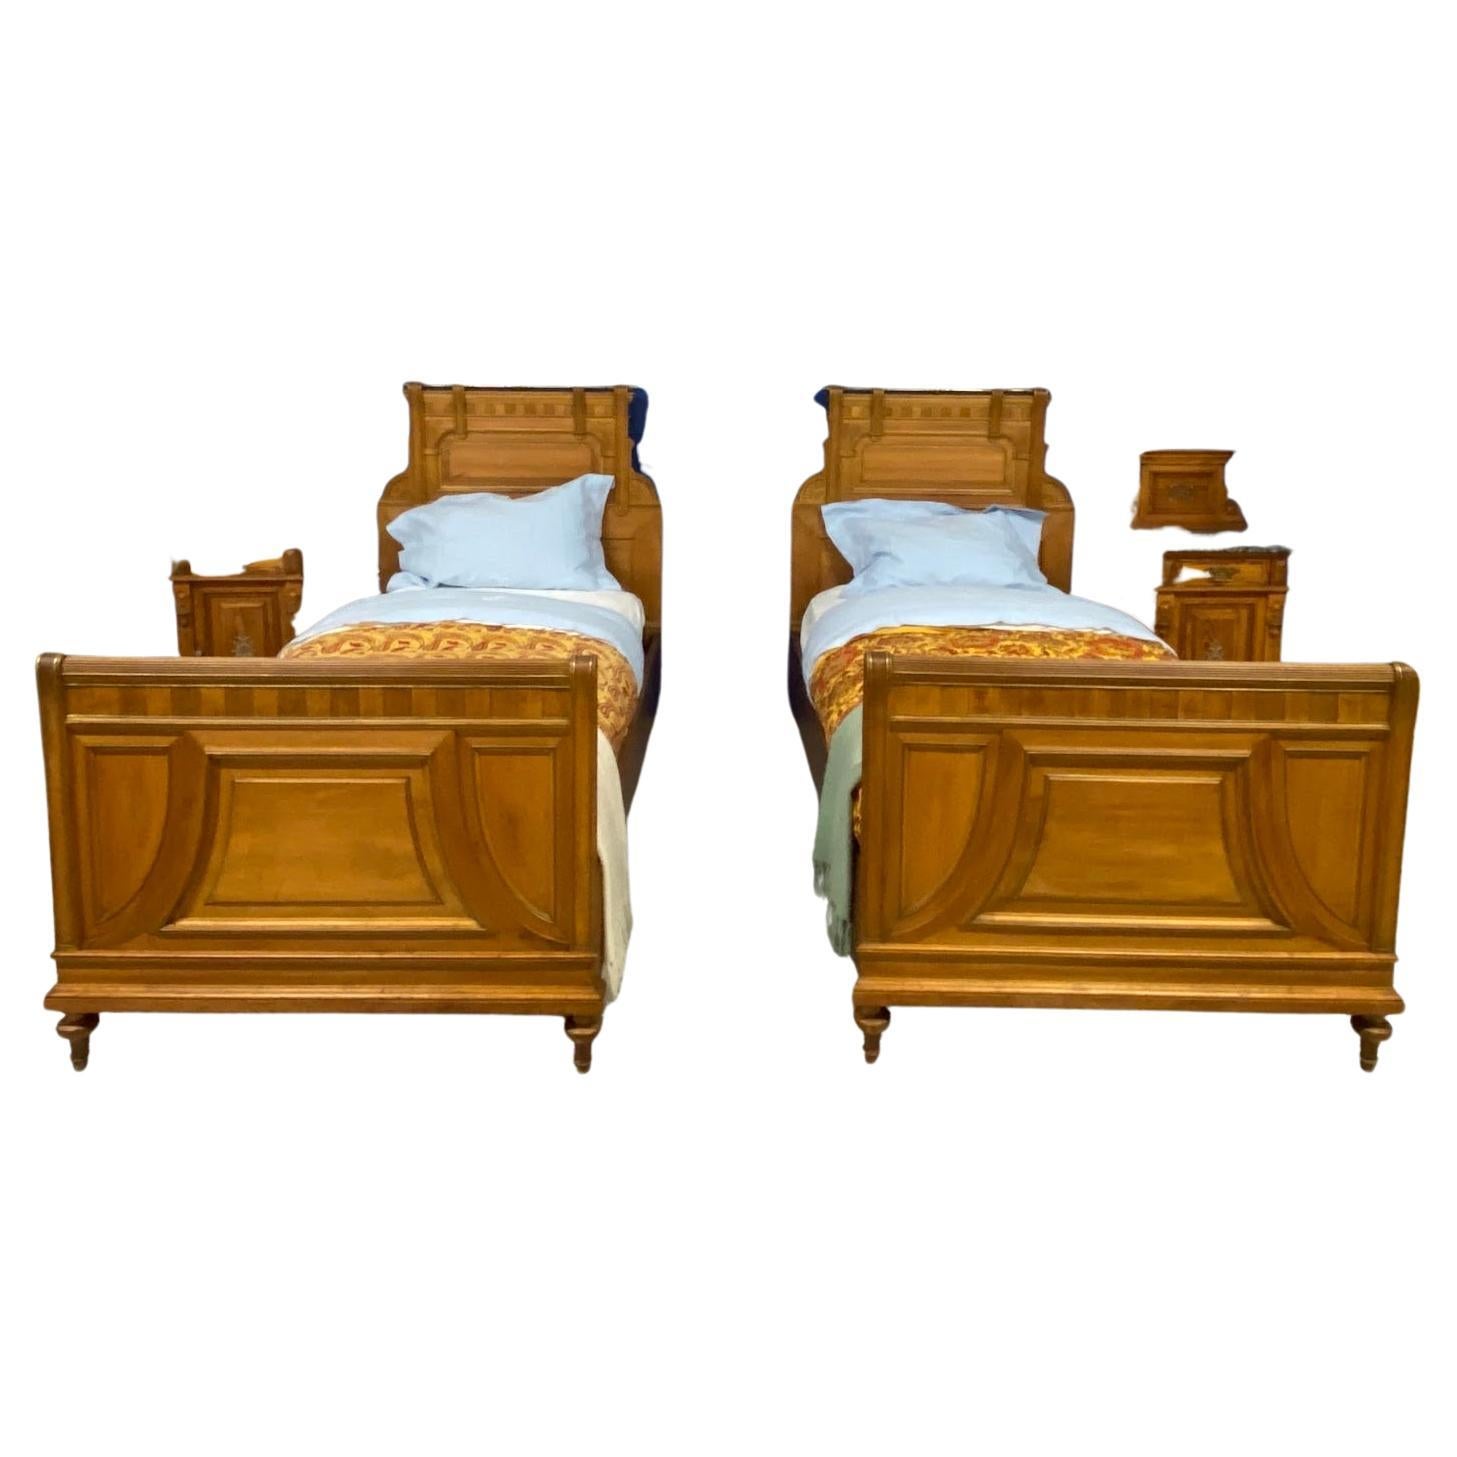 Austrian Decorative Twin Beds Wood